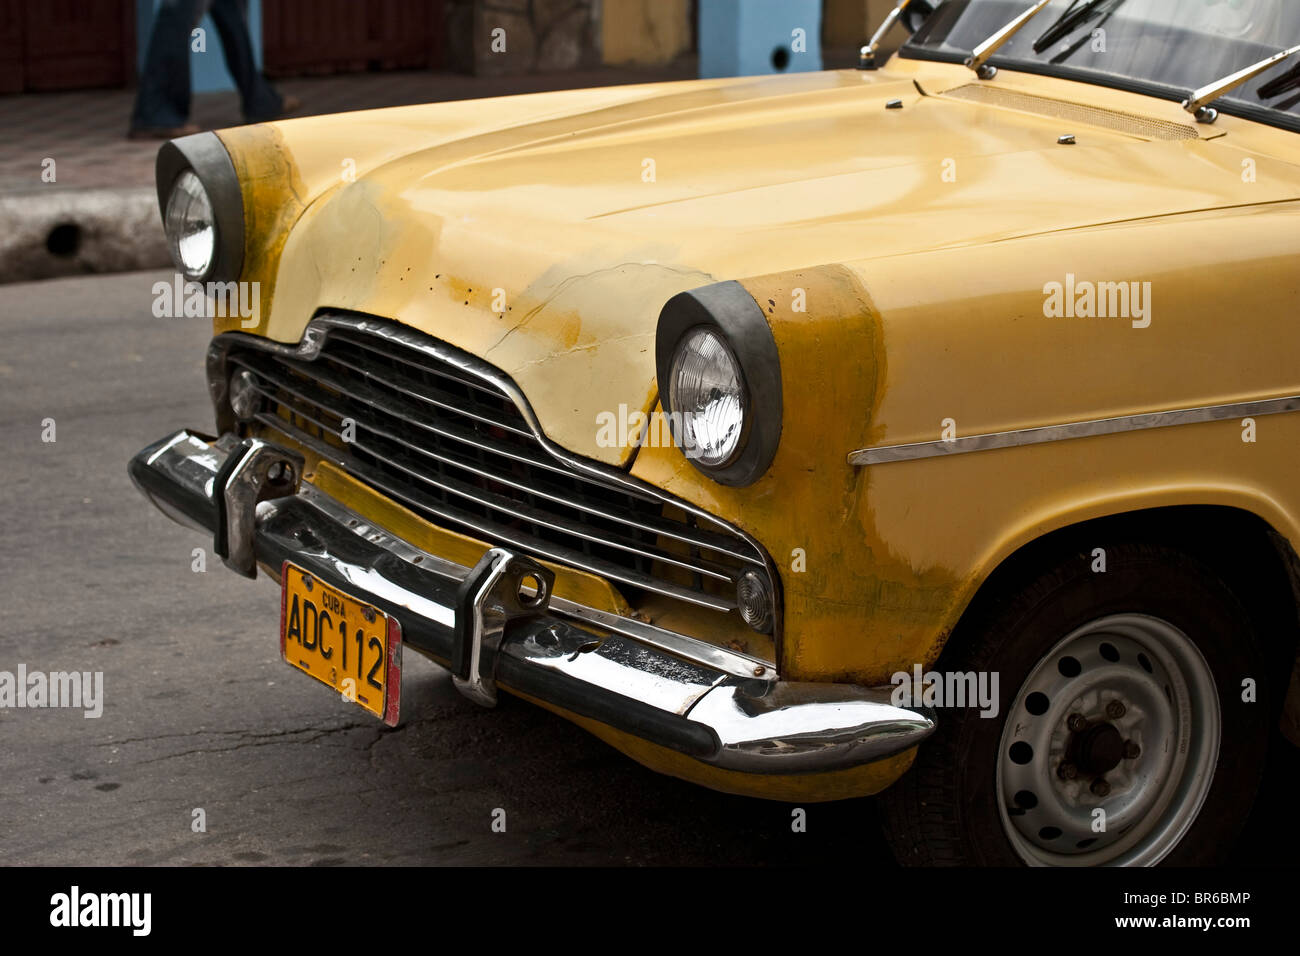 Vintage 1950's car in Cuba Stock Photo